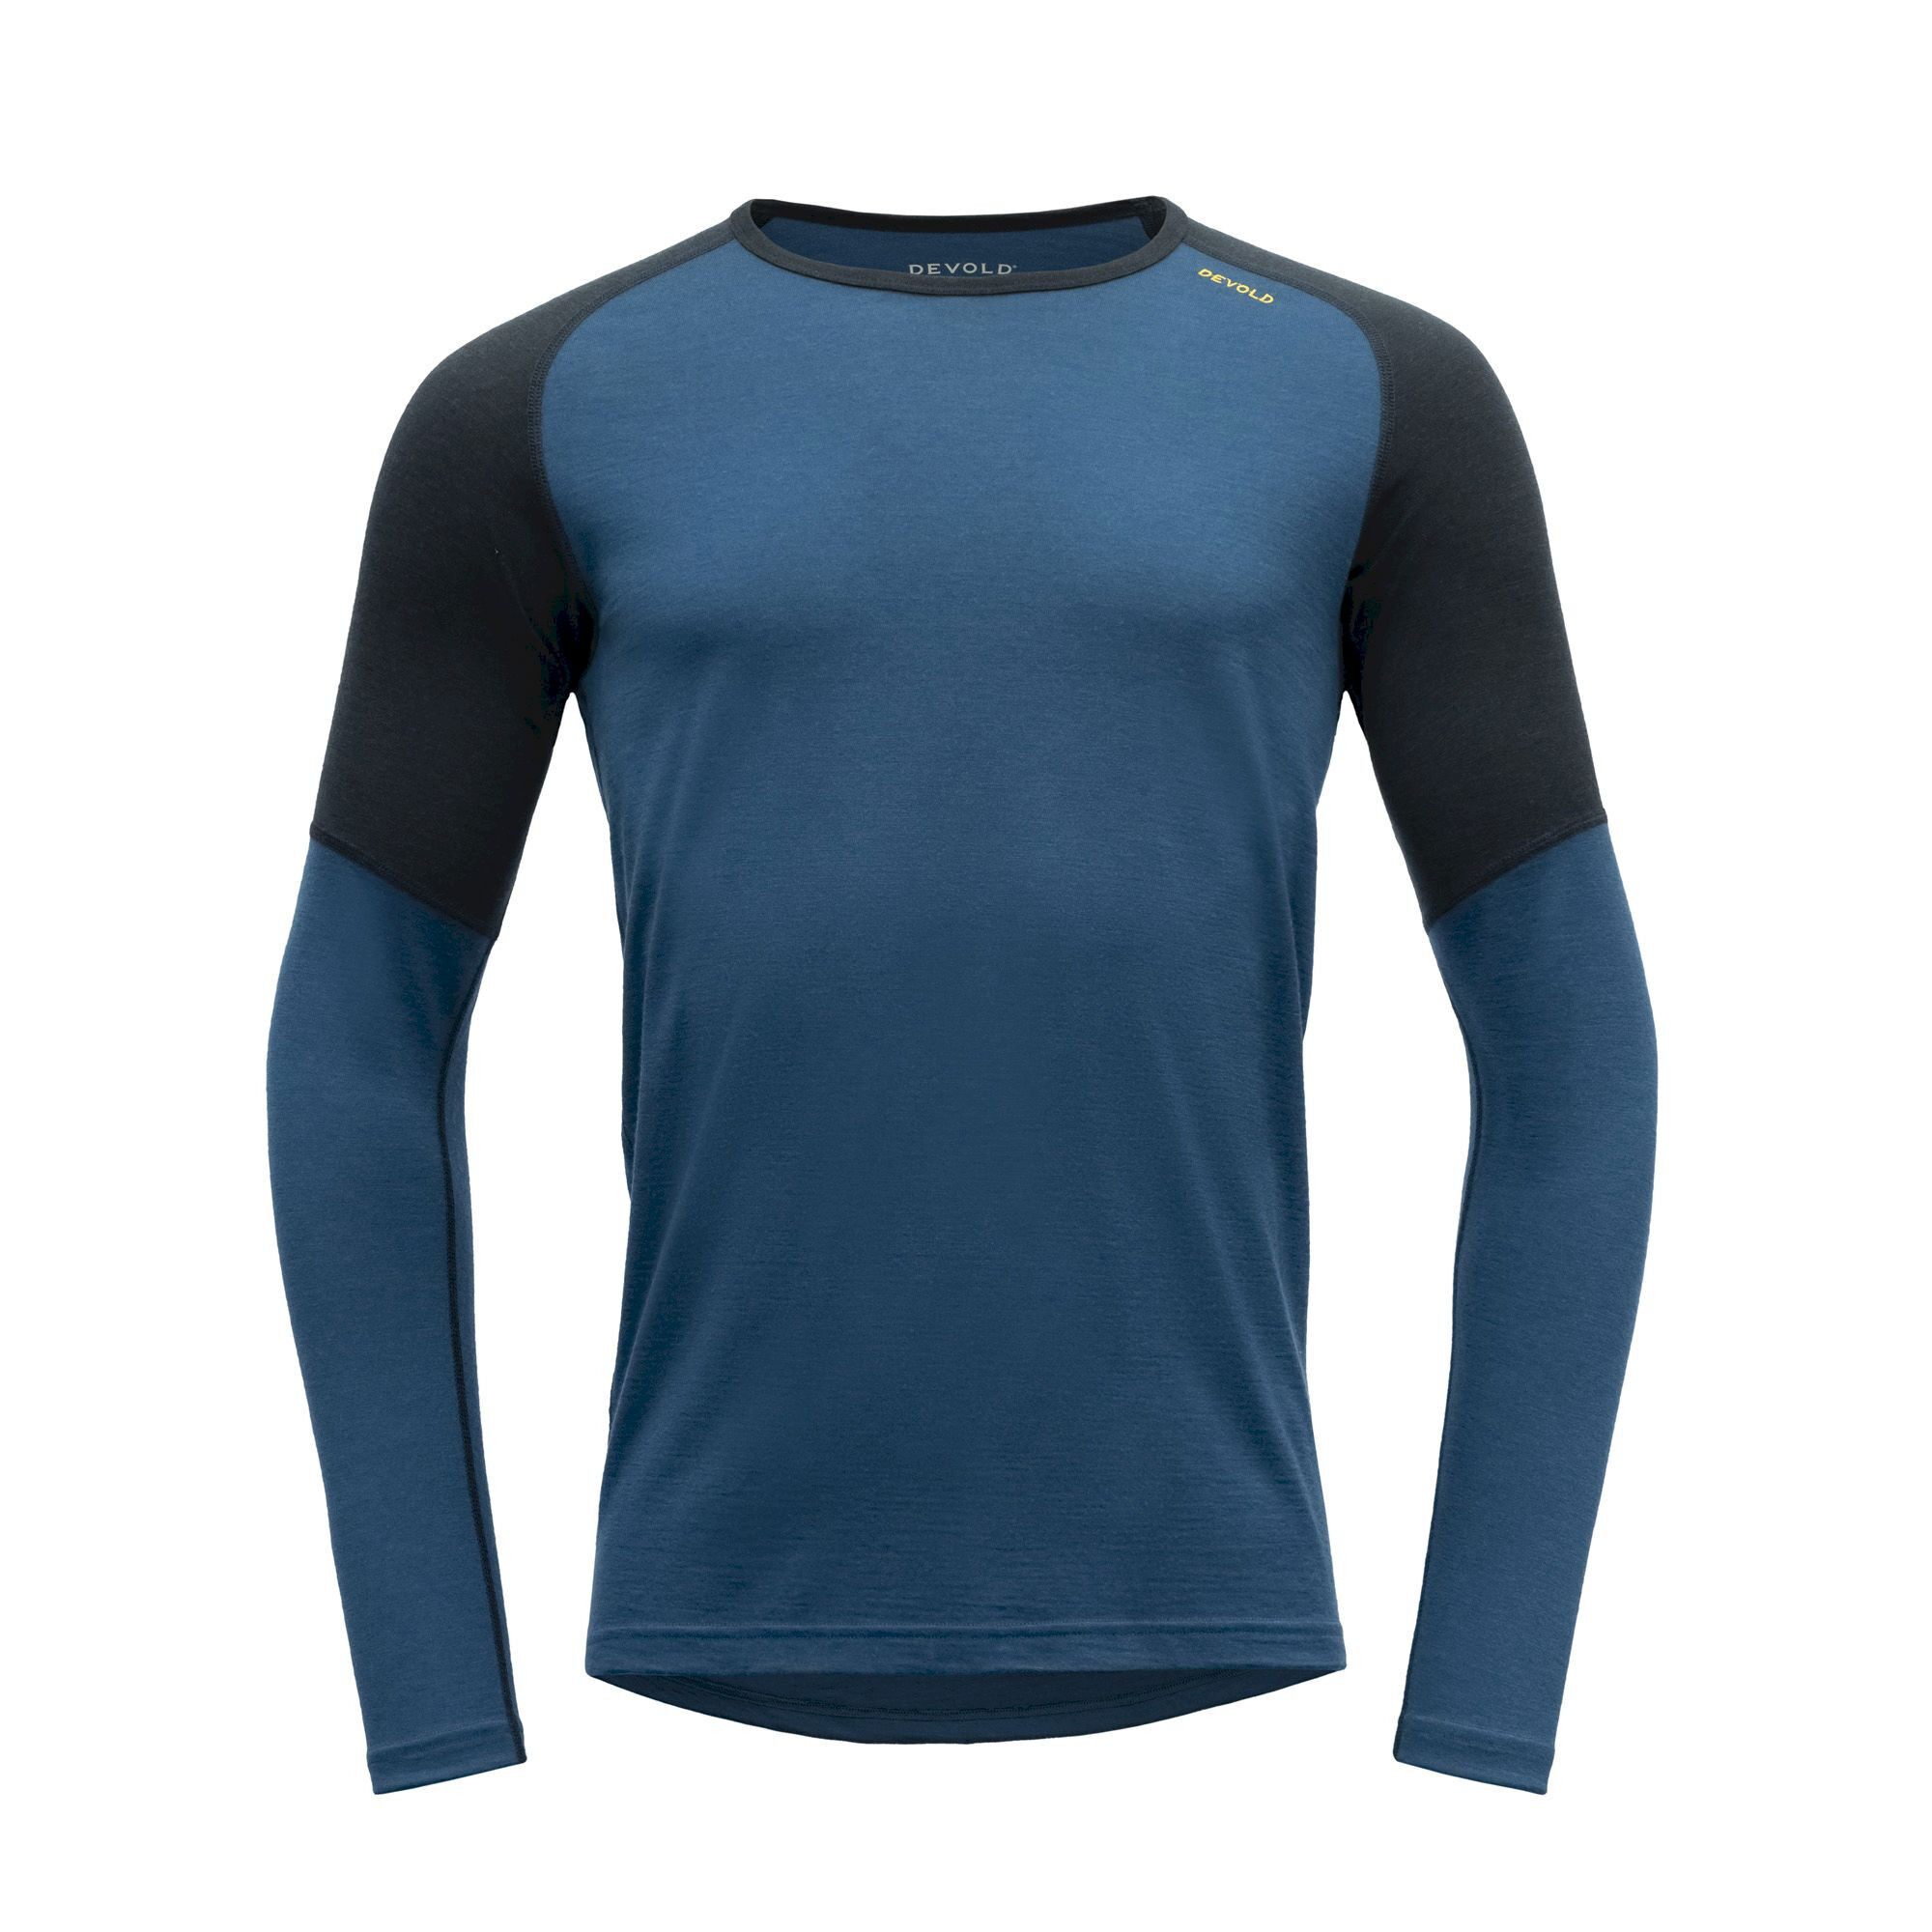 Devold Jakta Merino 200 Shirt - Sous-vêtement mérinos homme | Hardloop